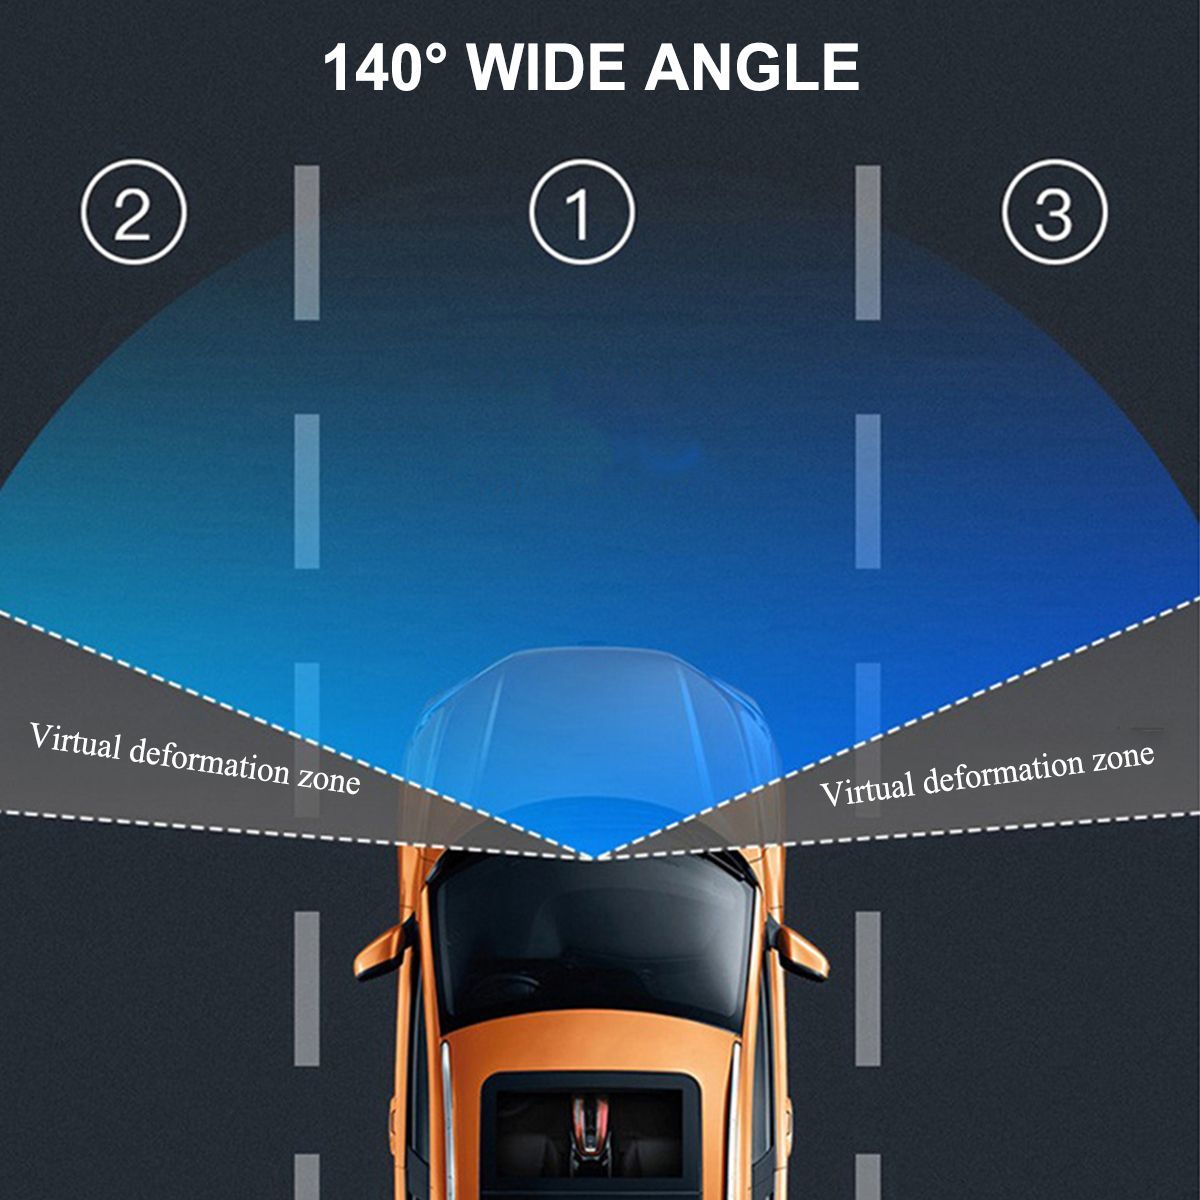 1080P-HD-WIFI-Car-DVR-Hidden-Mini-Car-Recorder-Dash-Cam-Night-Vision-App-140-Degrees-Wide-Angle-1718296